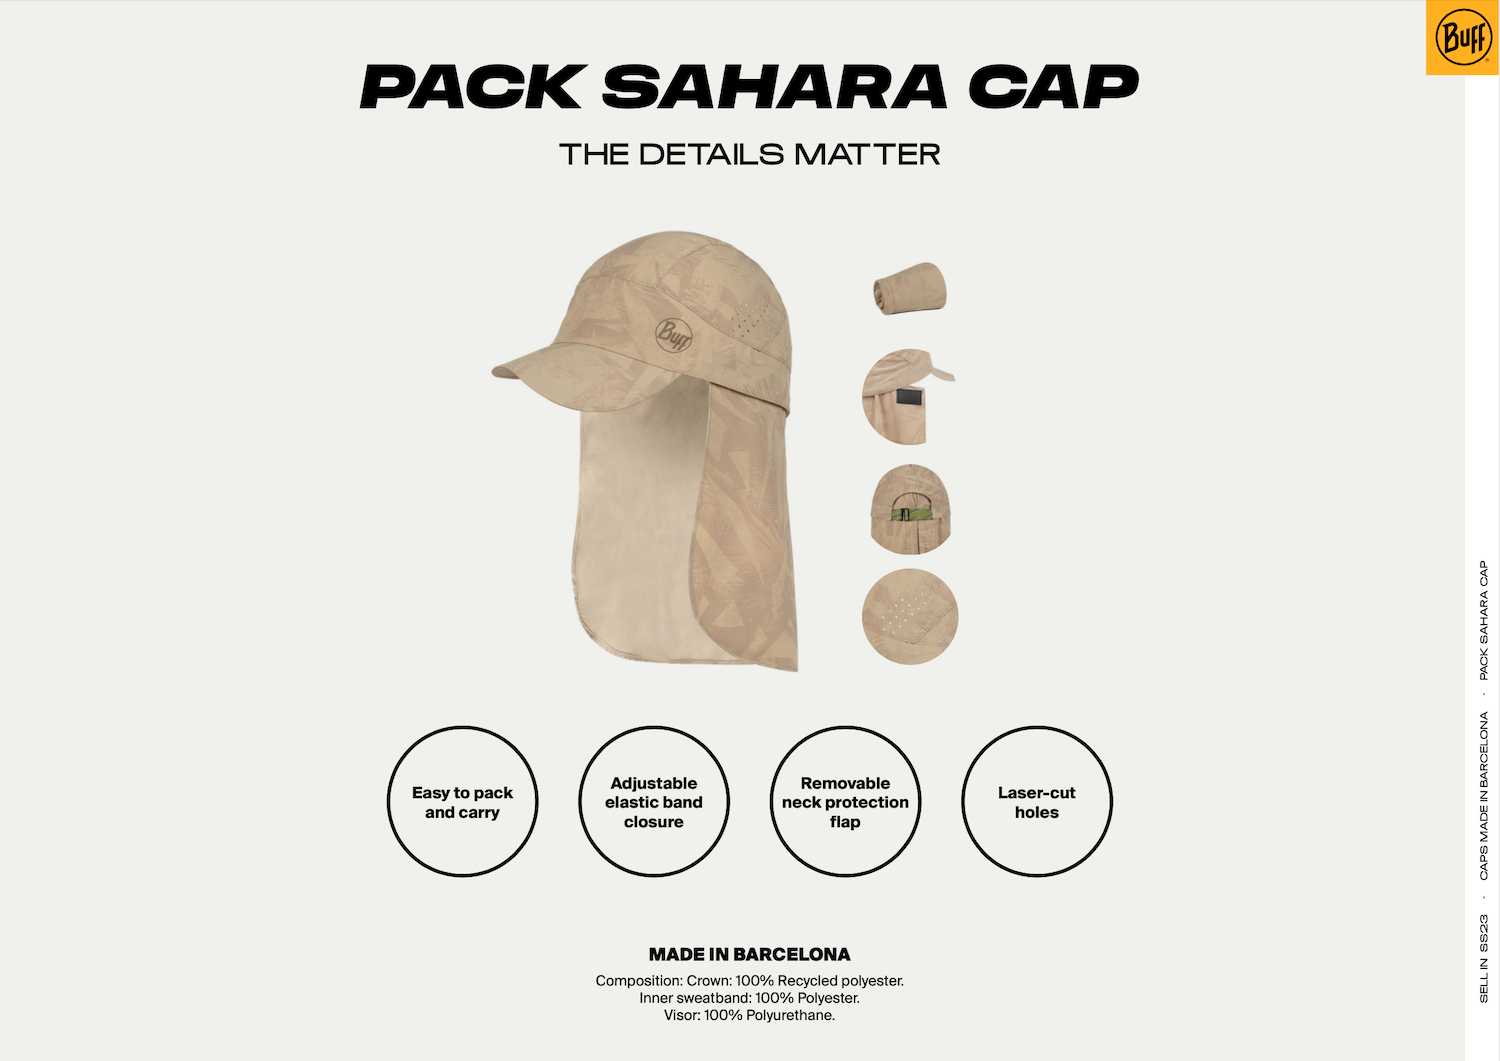 Pack Sahara Info